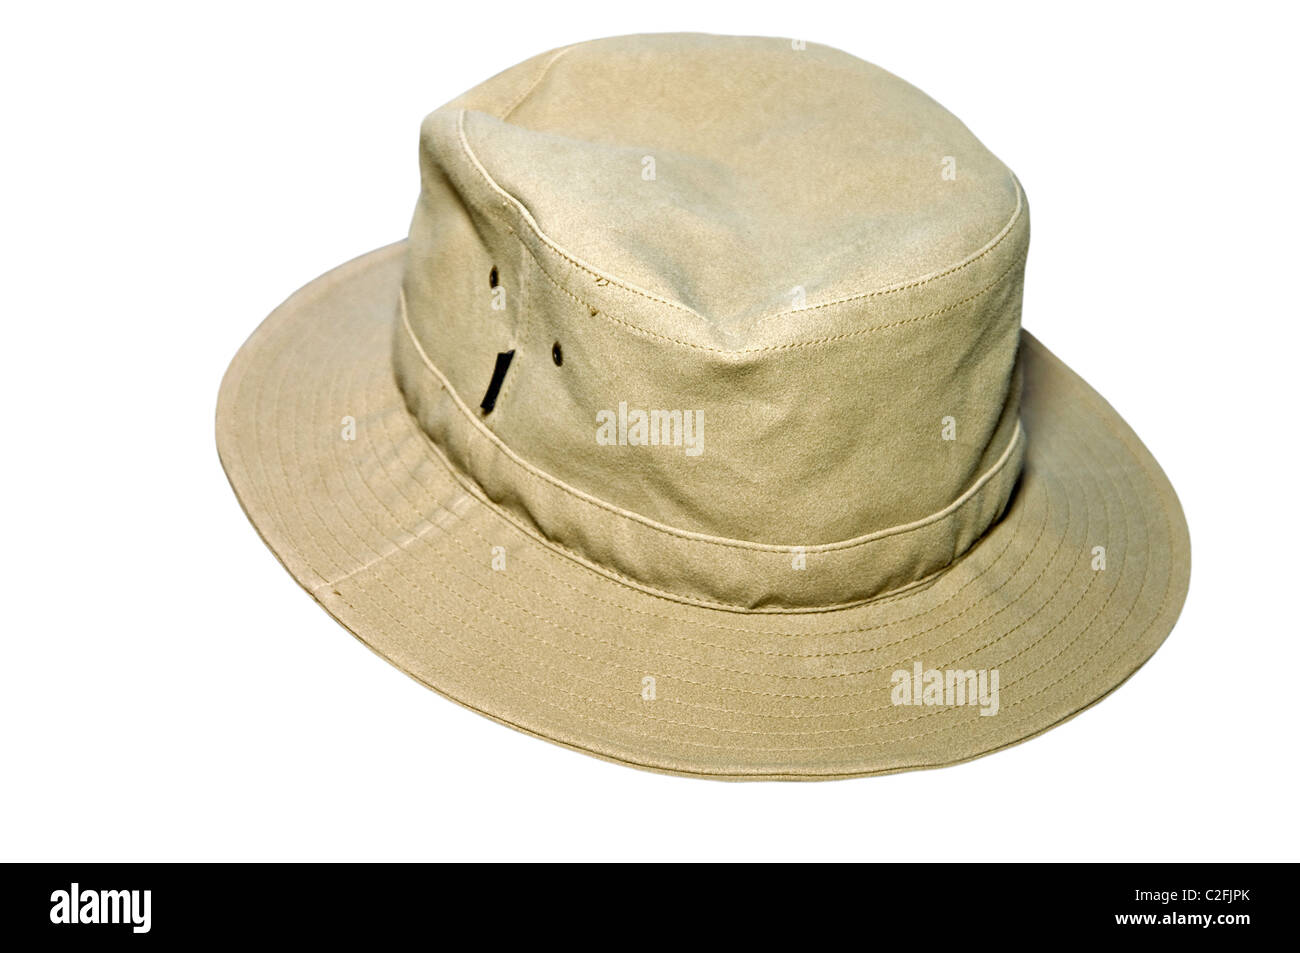 Sombrero de paño o lienzo aislado en blanco. Foto de stock